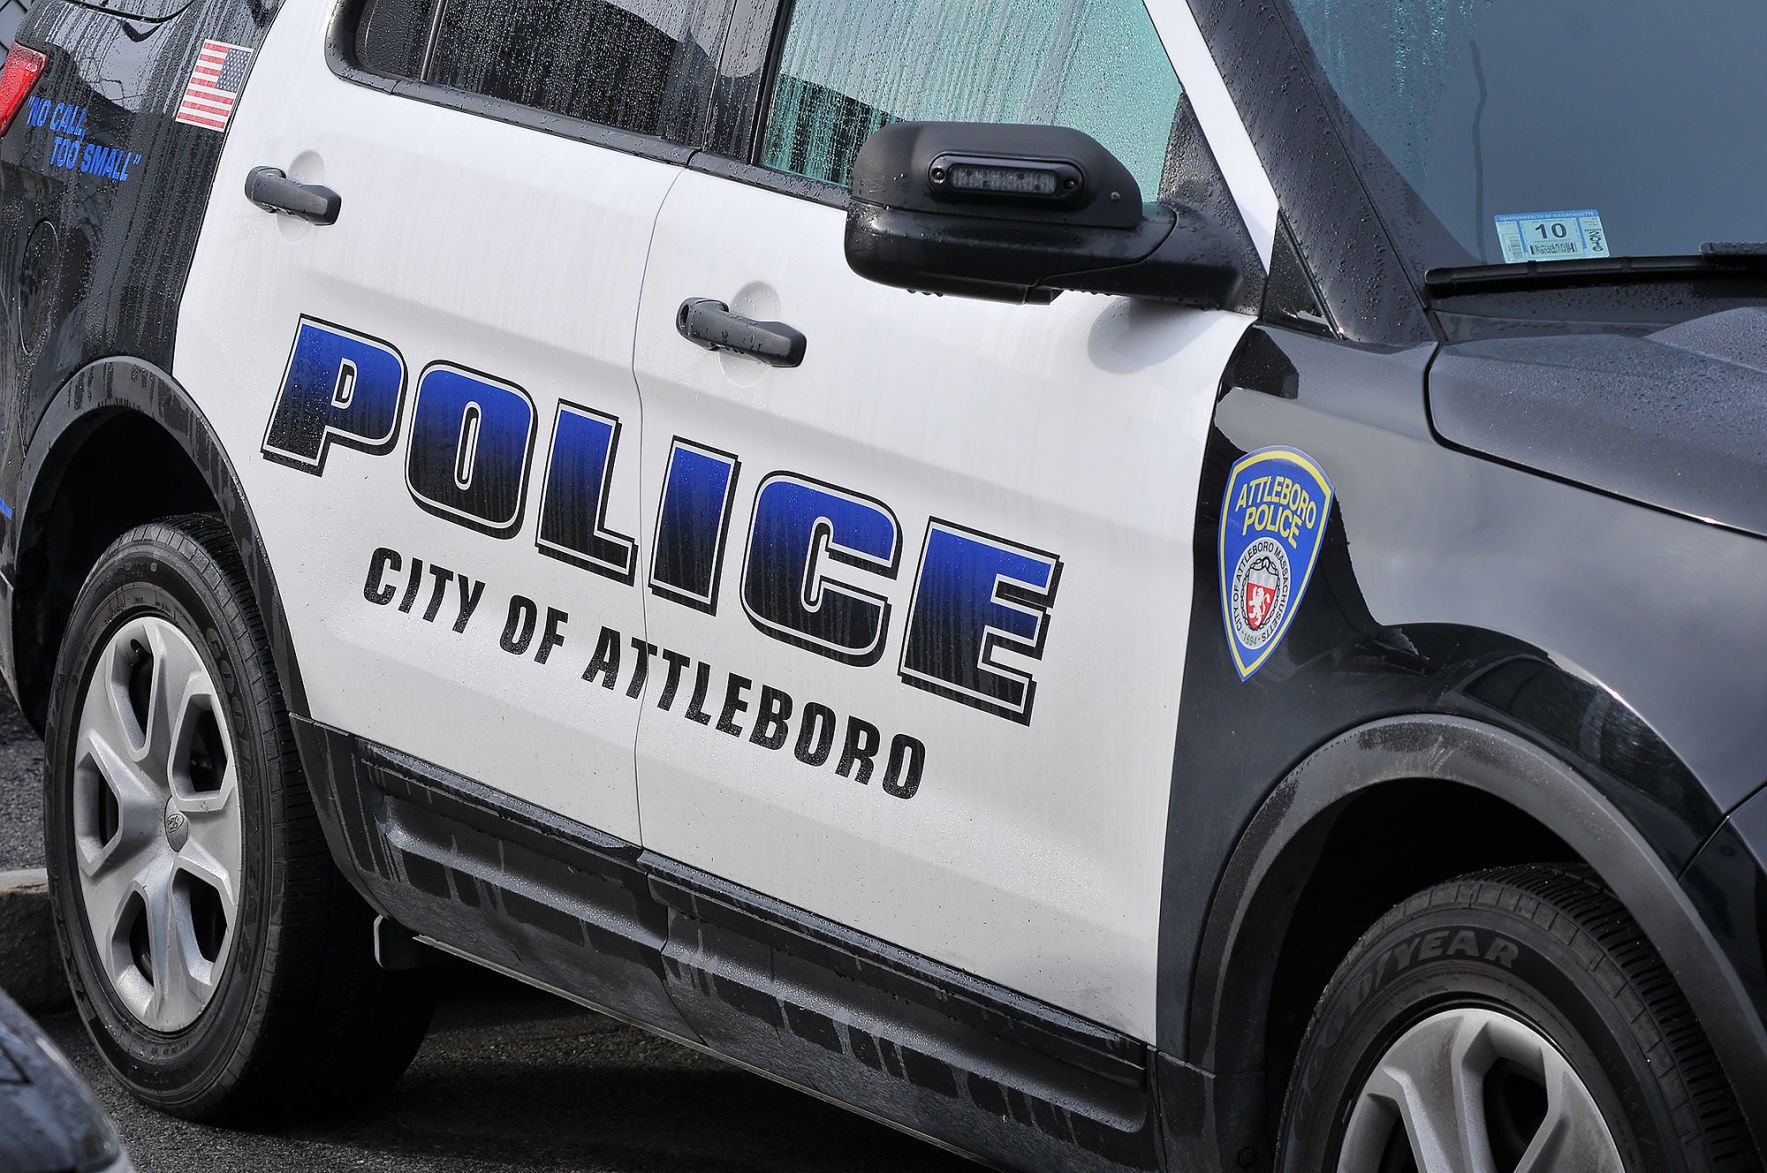 Clerk at South Attleboro lottery store and smoke shop robbed at gunpoint